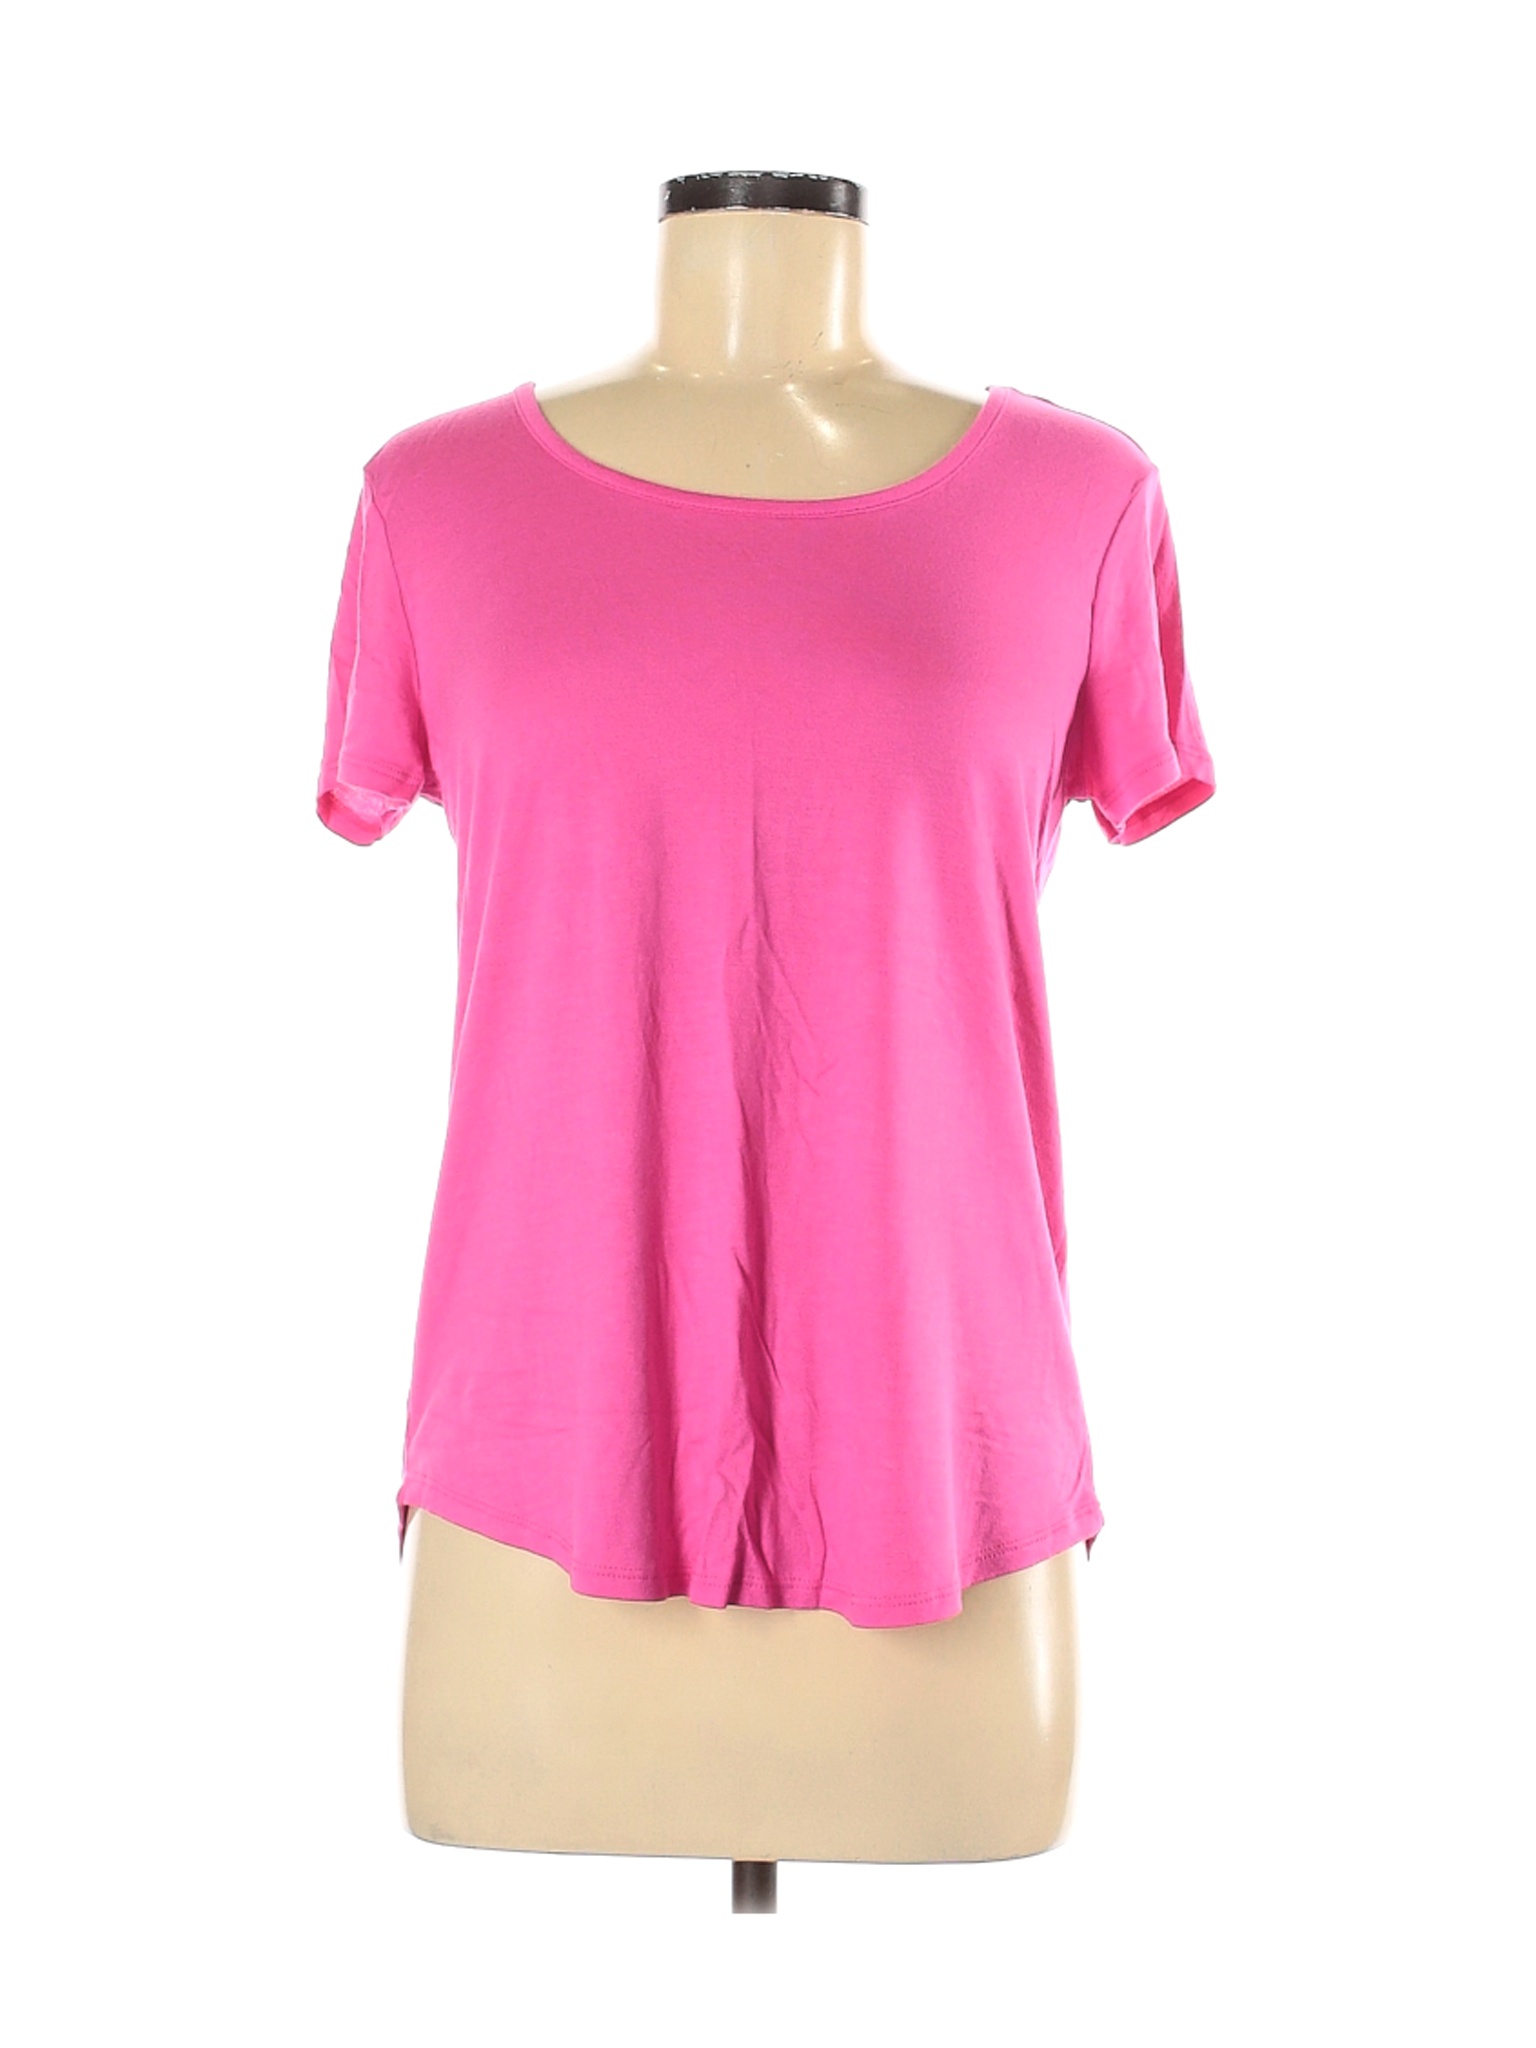 NWT Pink Rose Women Pink Short Sleeve Top M | eBay